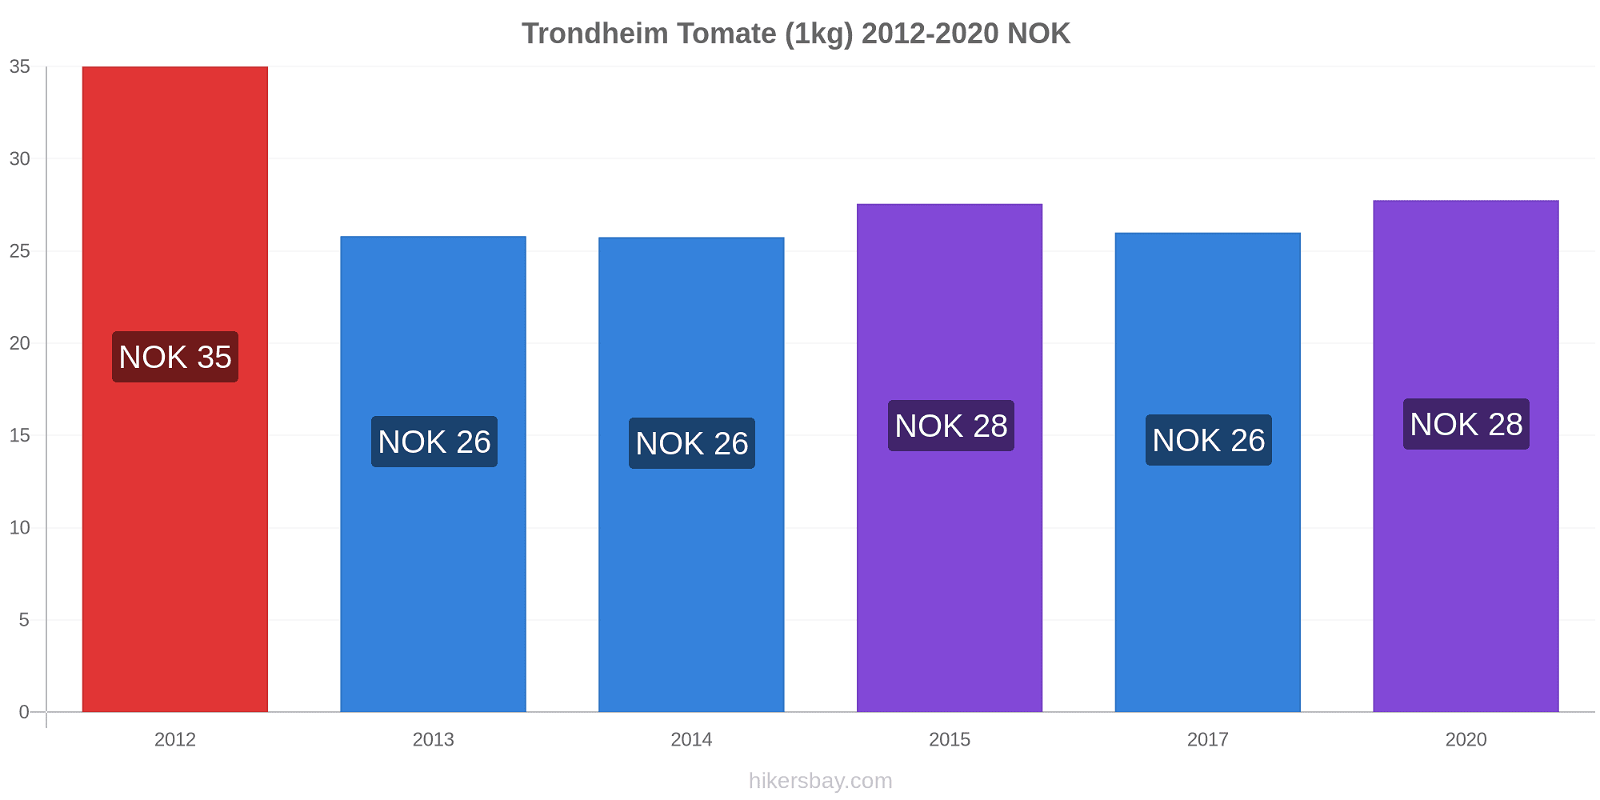 Trondheim changements de prix Tomate (1kg) hikersbay.com